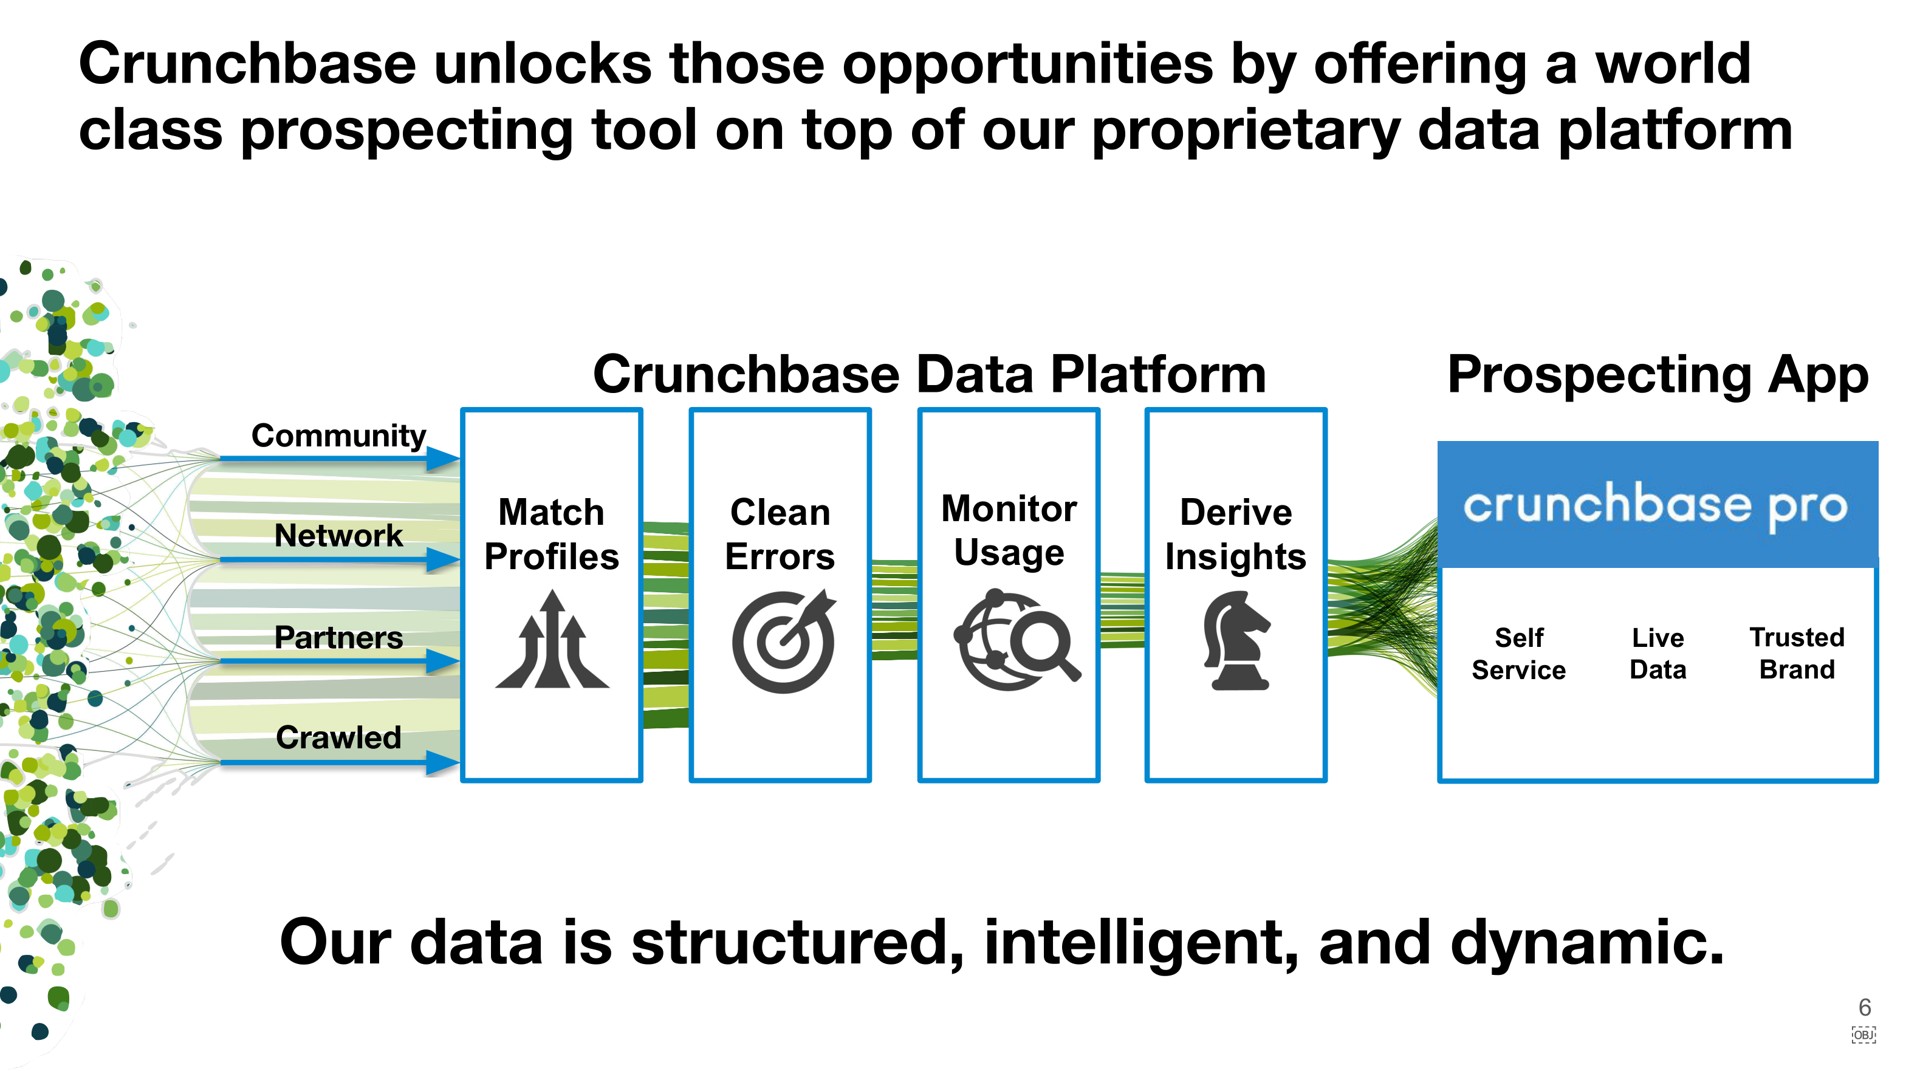 match profiles clean errors monitor usage derive insights self service live data trusted brand pro | Crunchbase